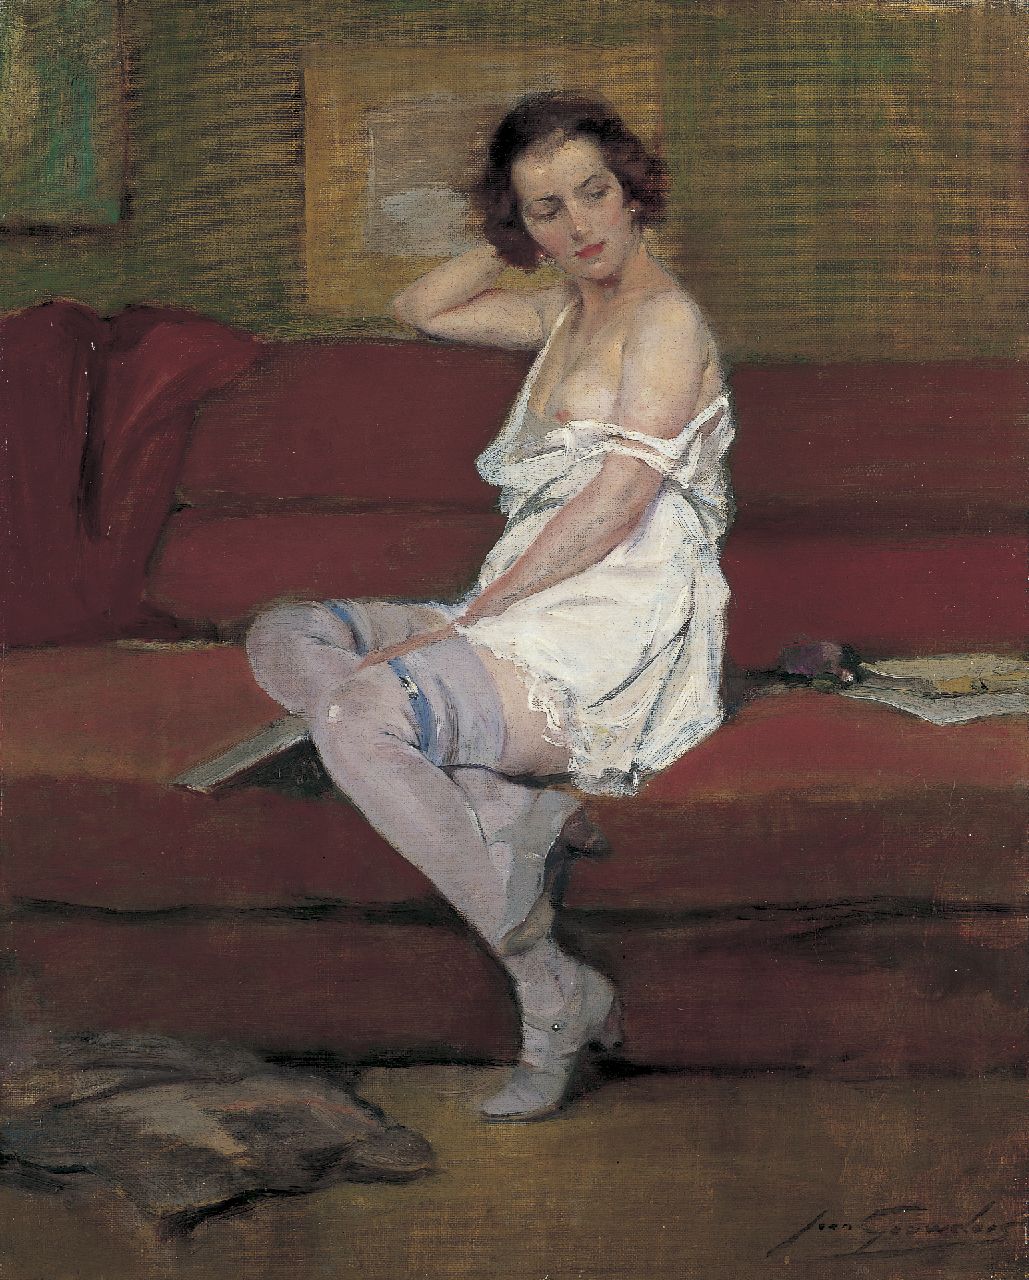 Gouweloos J.L.H.  | 'Jean' Léon Henri Gouweloos, A Lady on a Couch, Öl auf Leinwand 50,0 x 40,1 cm, signed l.r.